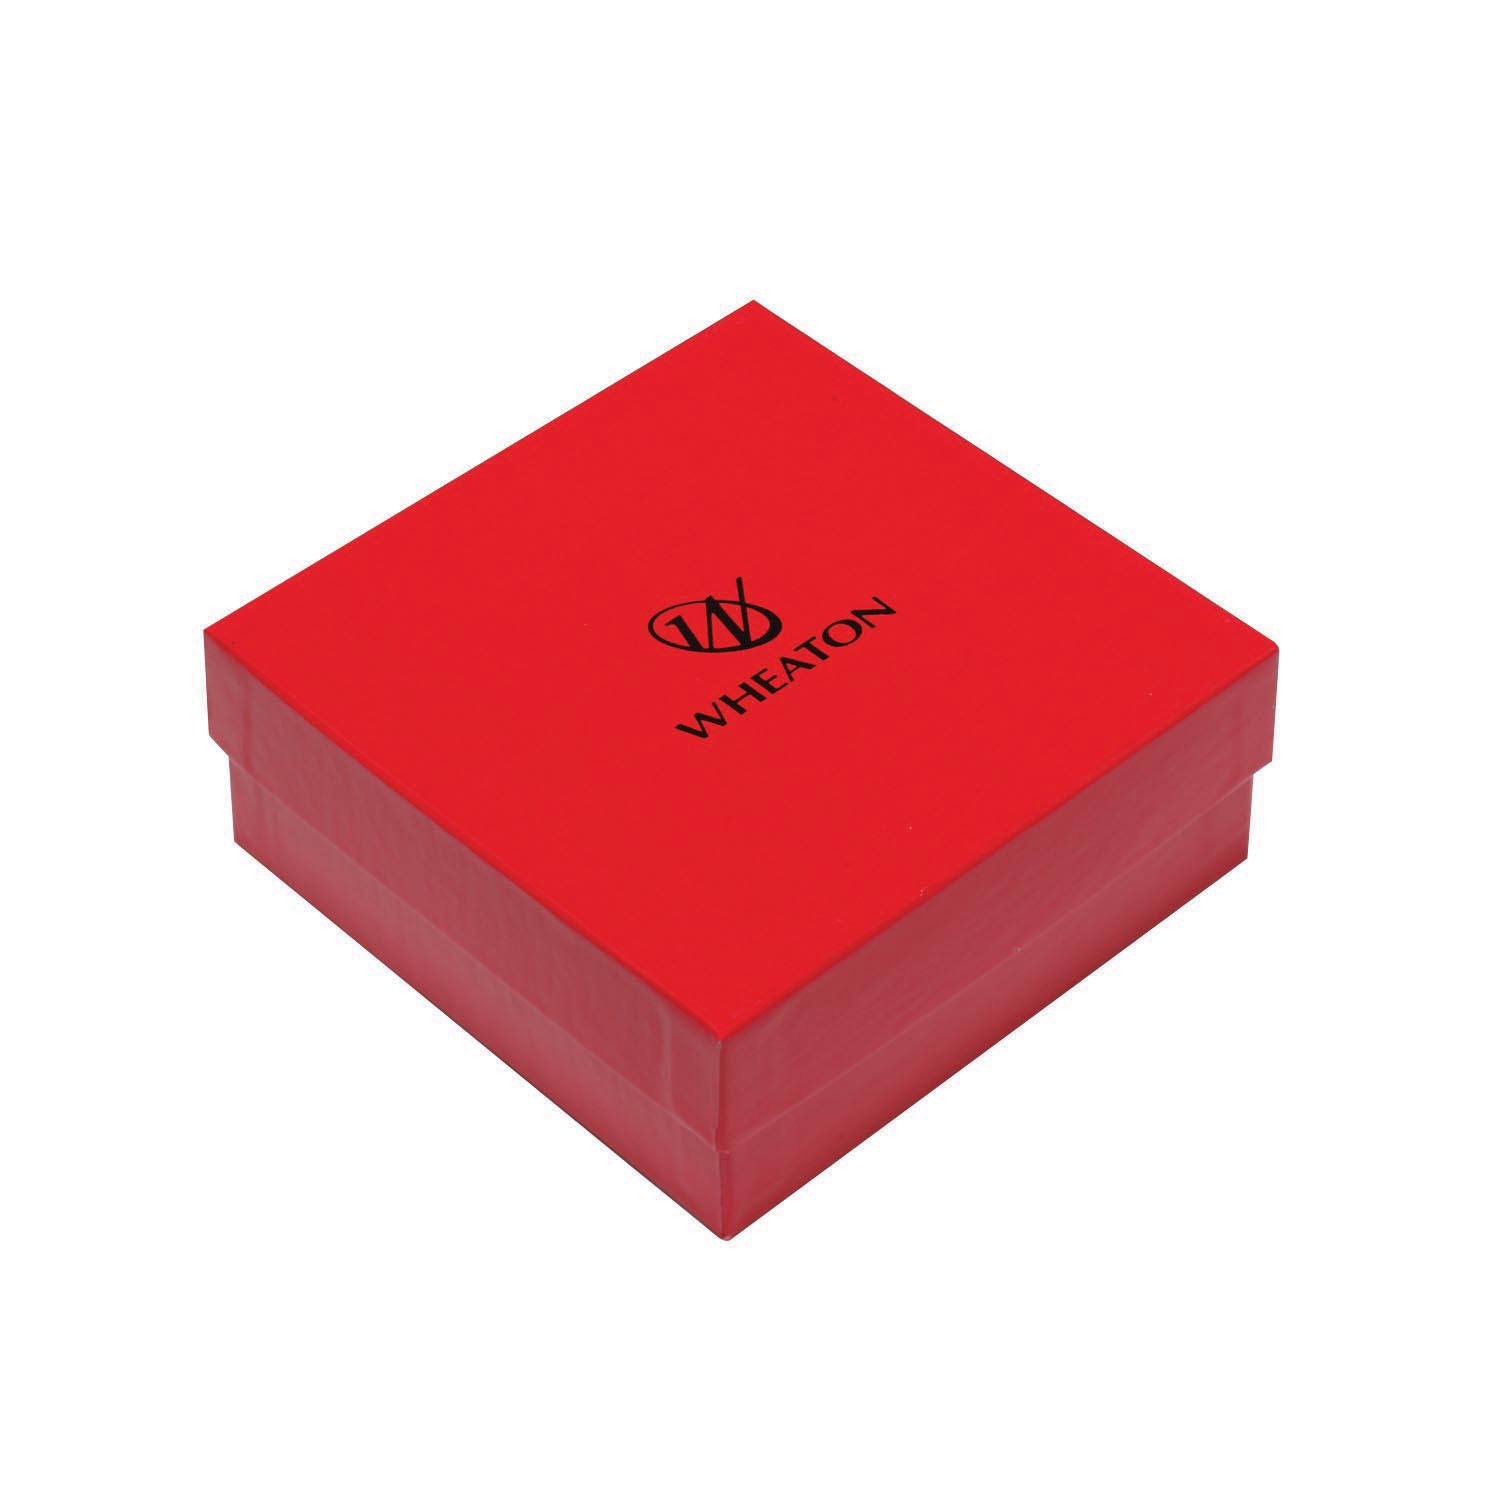 WHEATON Cryule 冻存盒 - 环境科学产品